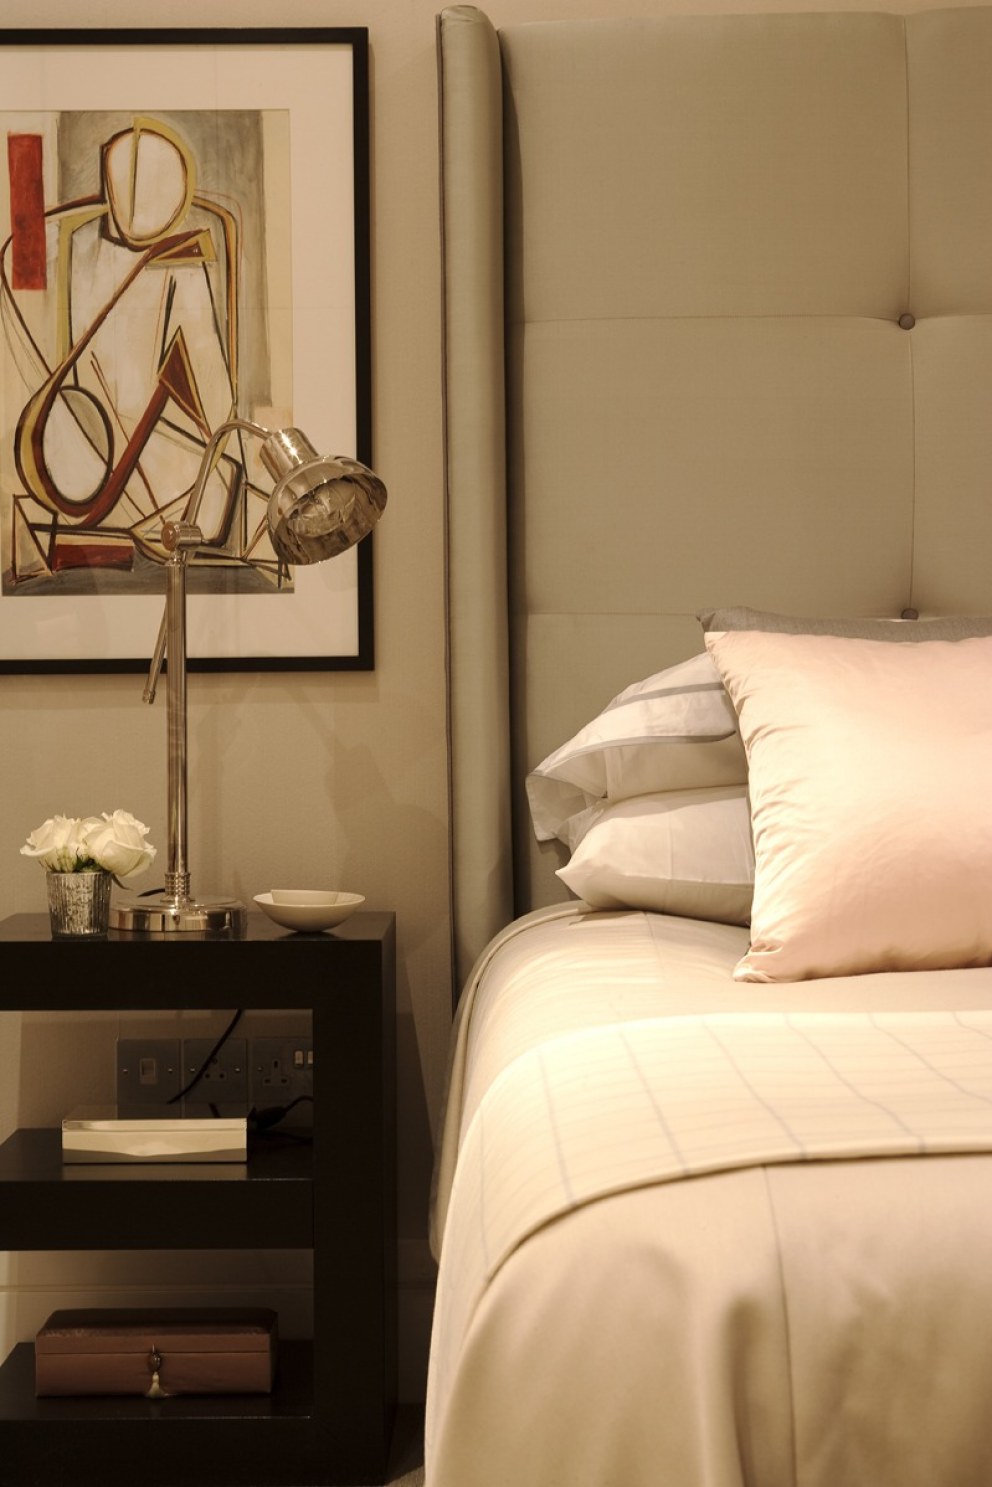 3 bedroom apartment in Chelsea | Master Bedroom | Interior Designers